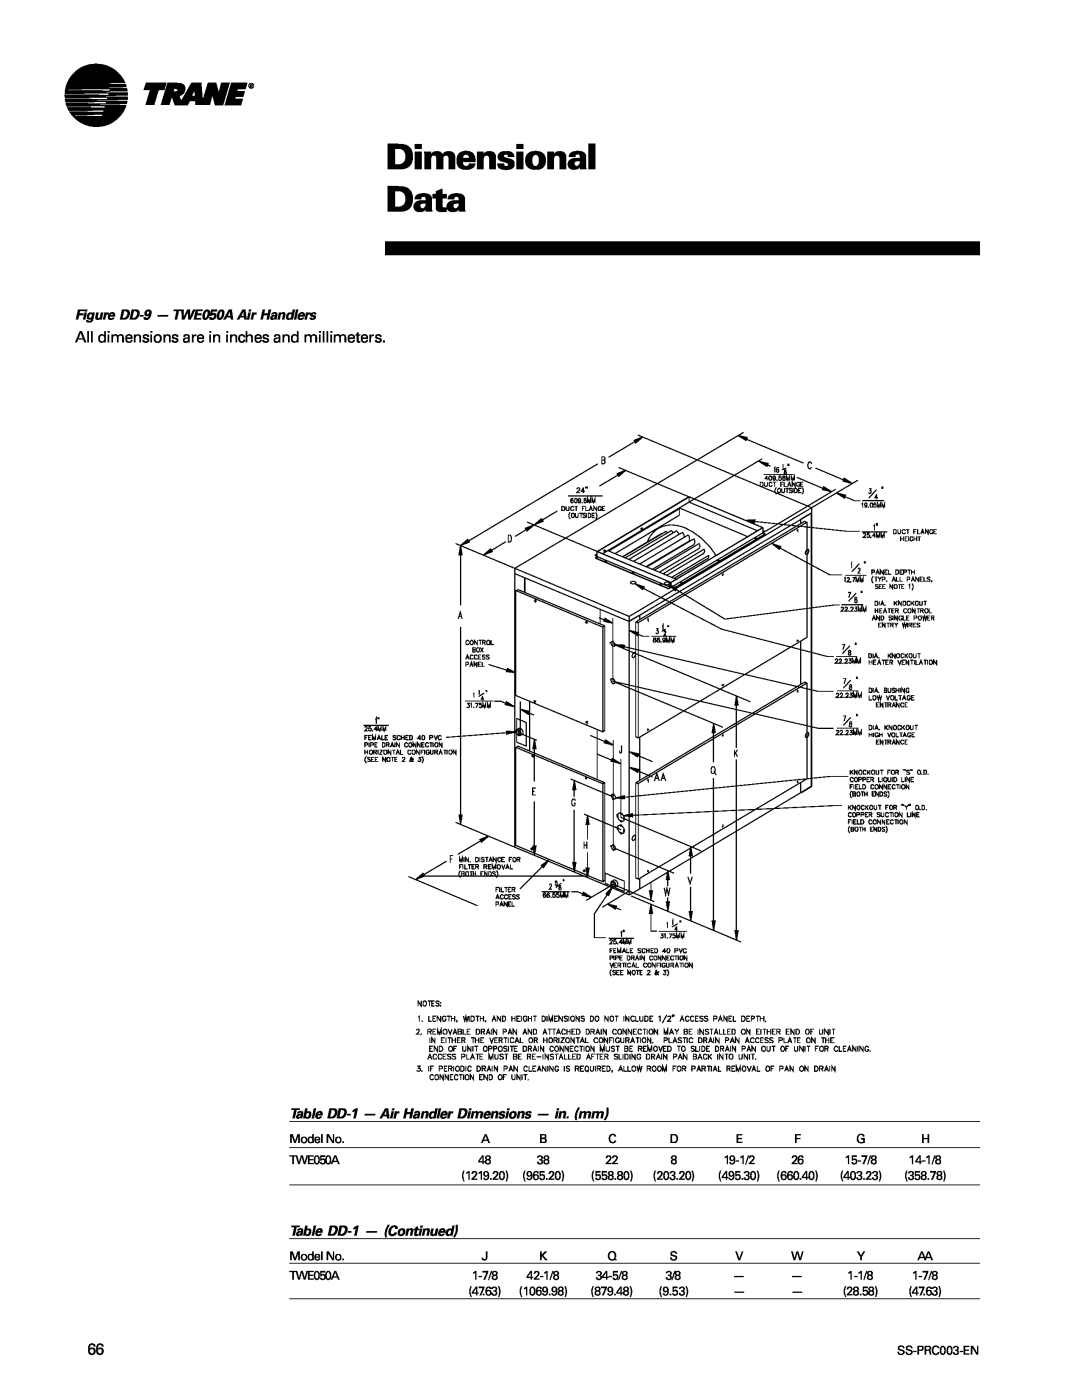 Trane SS-PRC003-EN manual Dimensional Data, Figure DD-9- TWE050A Air Handlers, Table DD-1- Air Handler Dimensions - in. mm 